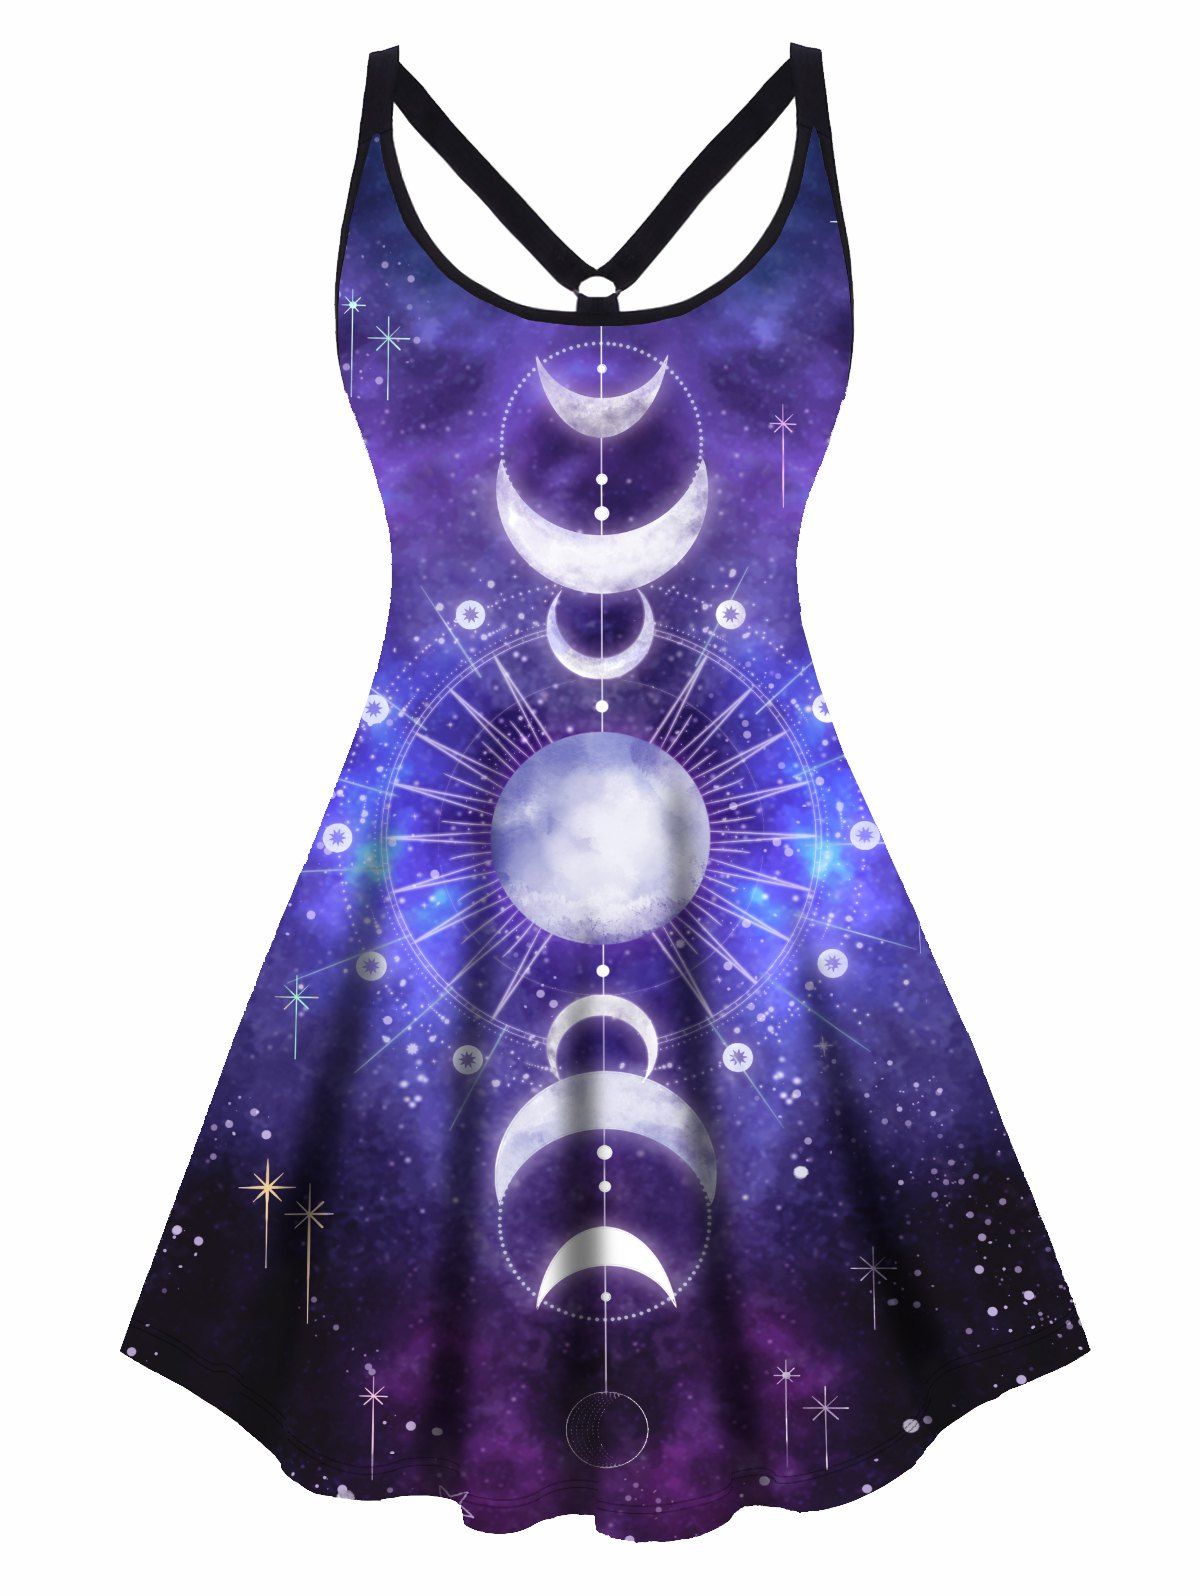 Plus Size Dress Moon Phase Galaxy Print Mini Dress Sleeveless A Line Cami Dress - BLACK L